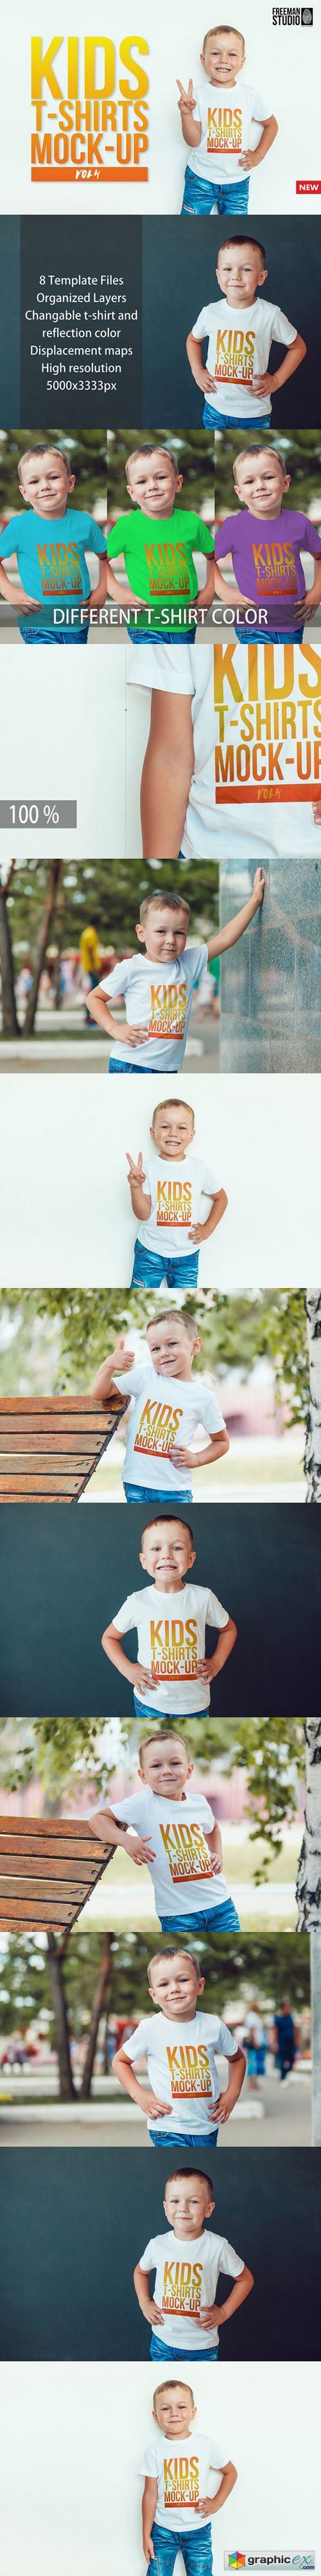 Kids T-Shirt Mock-Up Vol 4